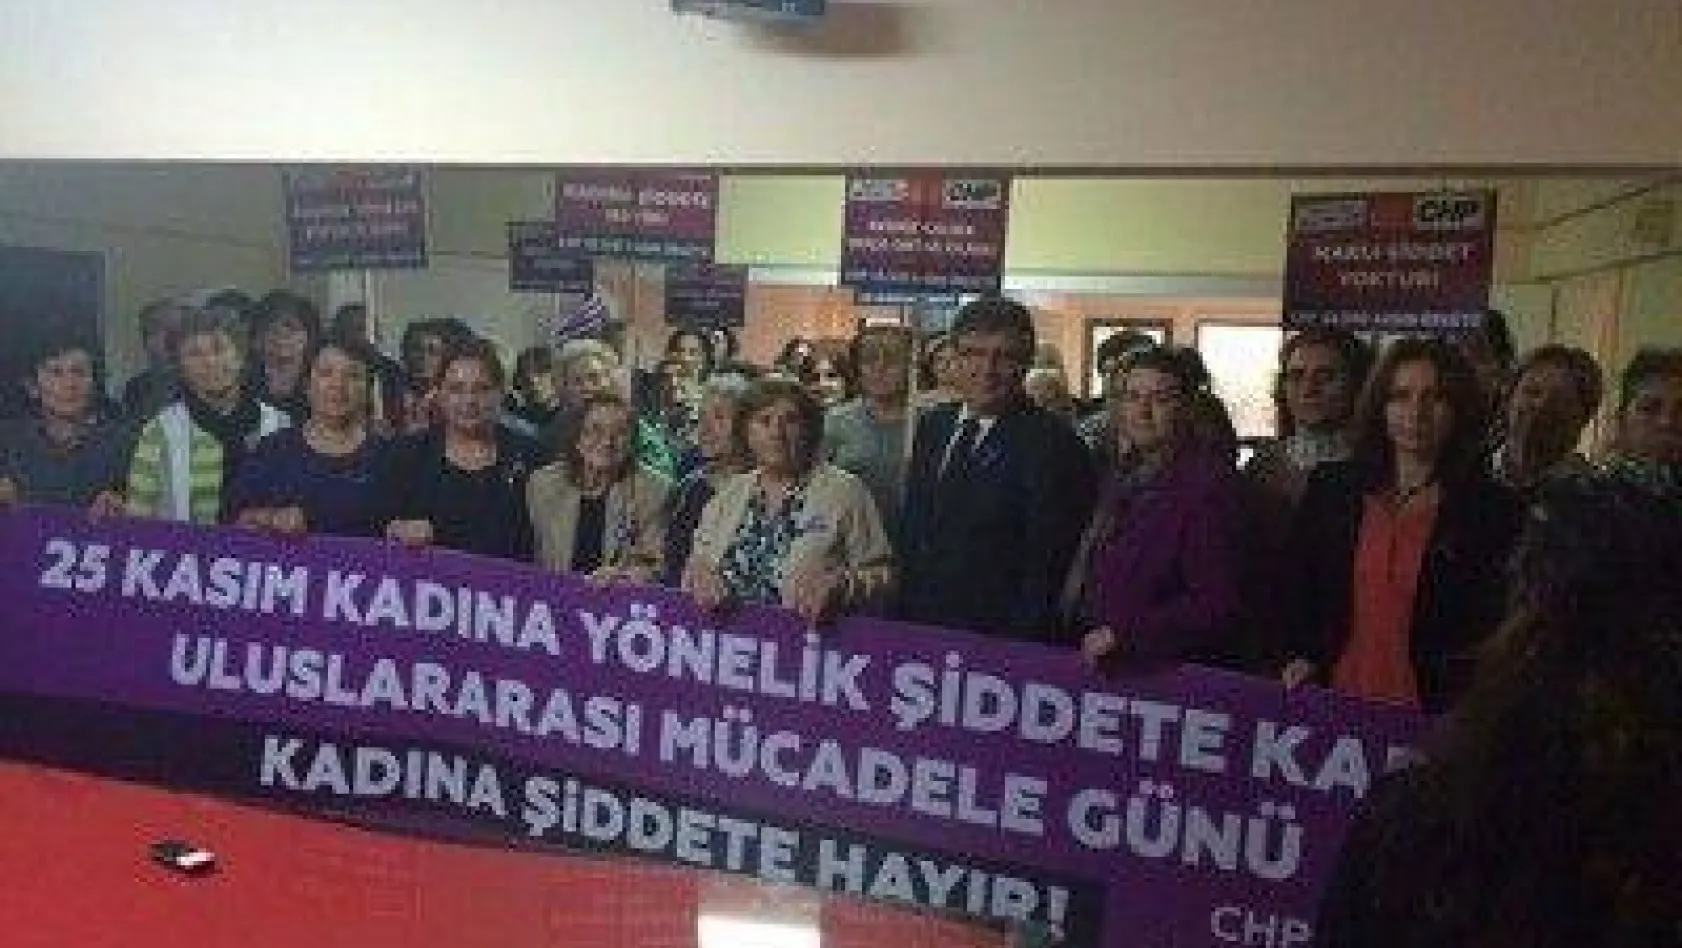 CHP'li kadınlardan şiddete karşı tavır